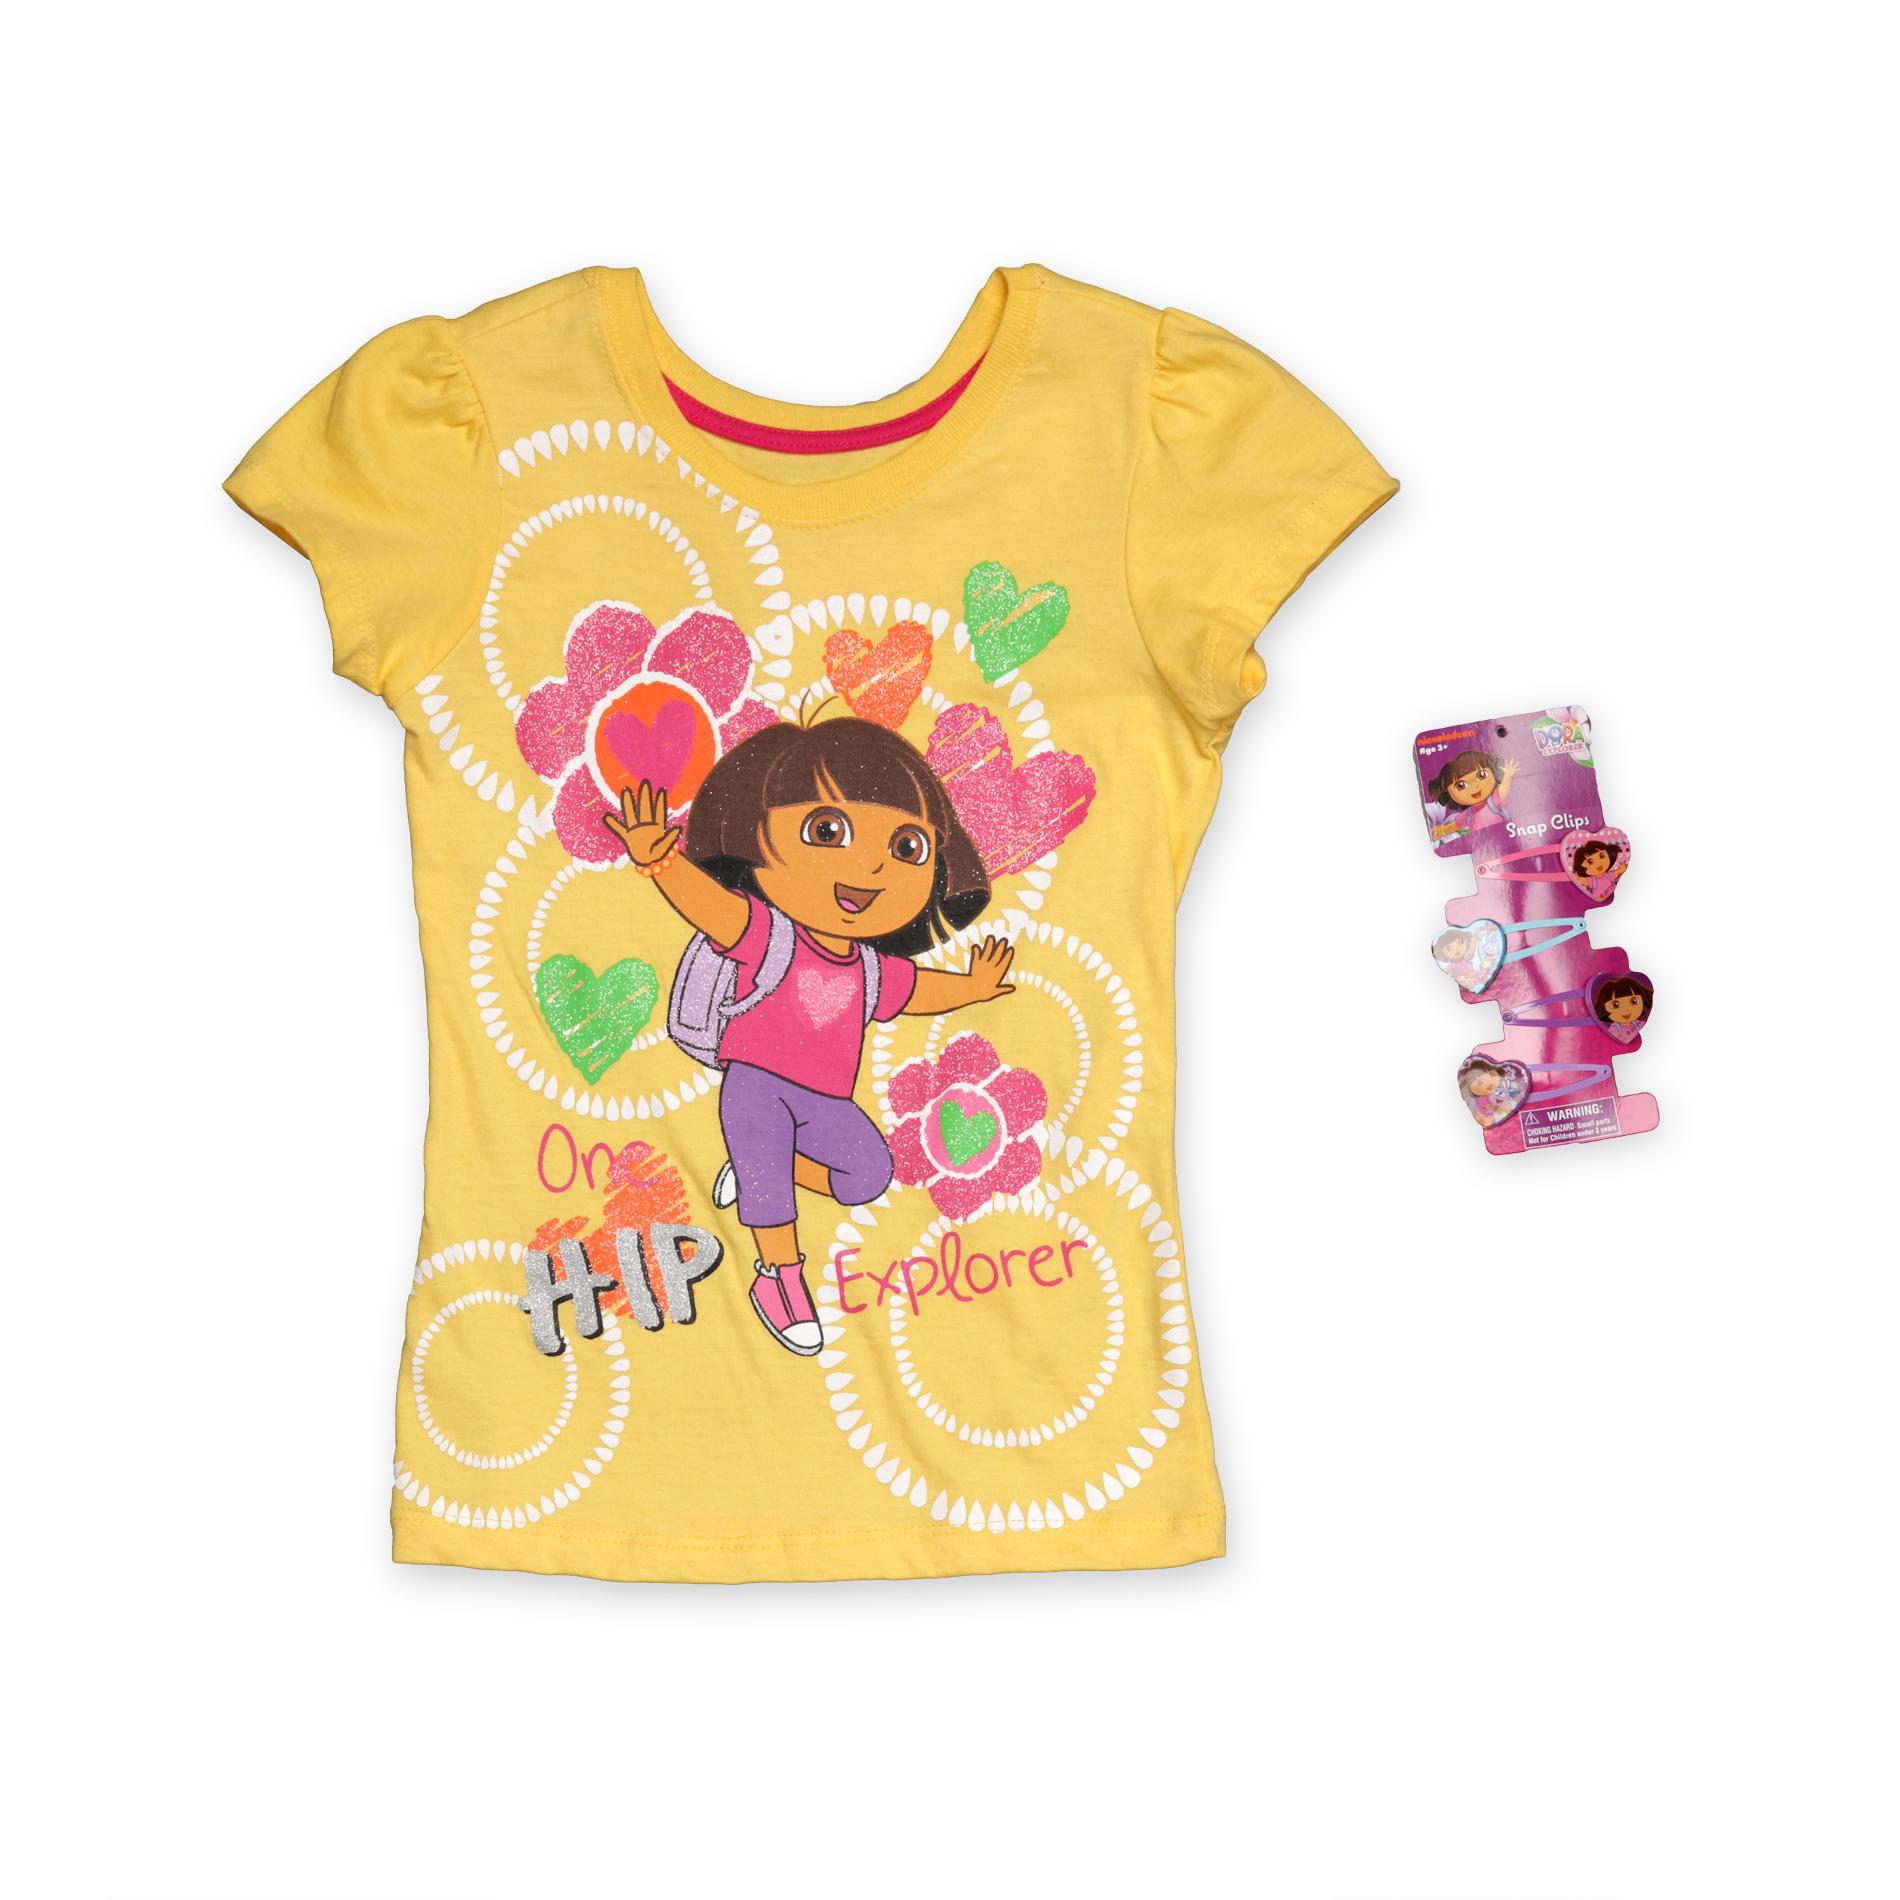 Nickelodeon Dora the Explorer Girl's T-Shirt & Barrettes